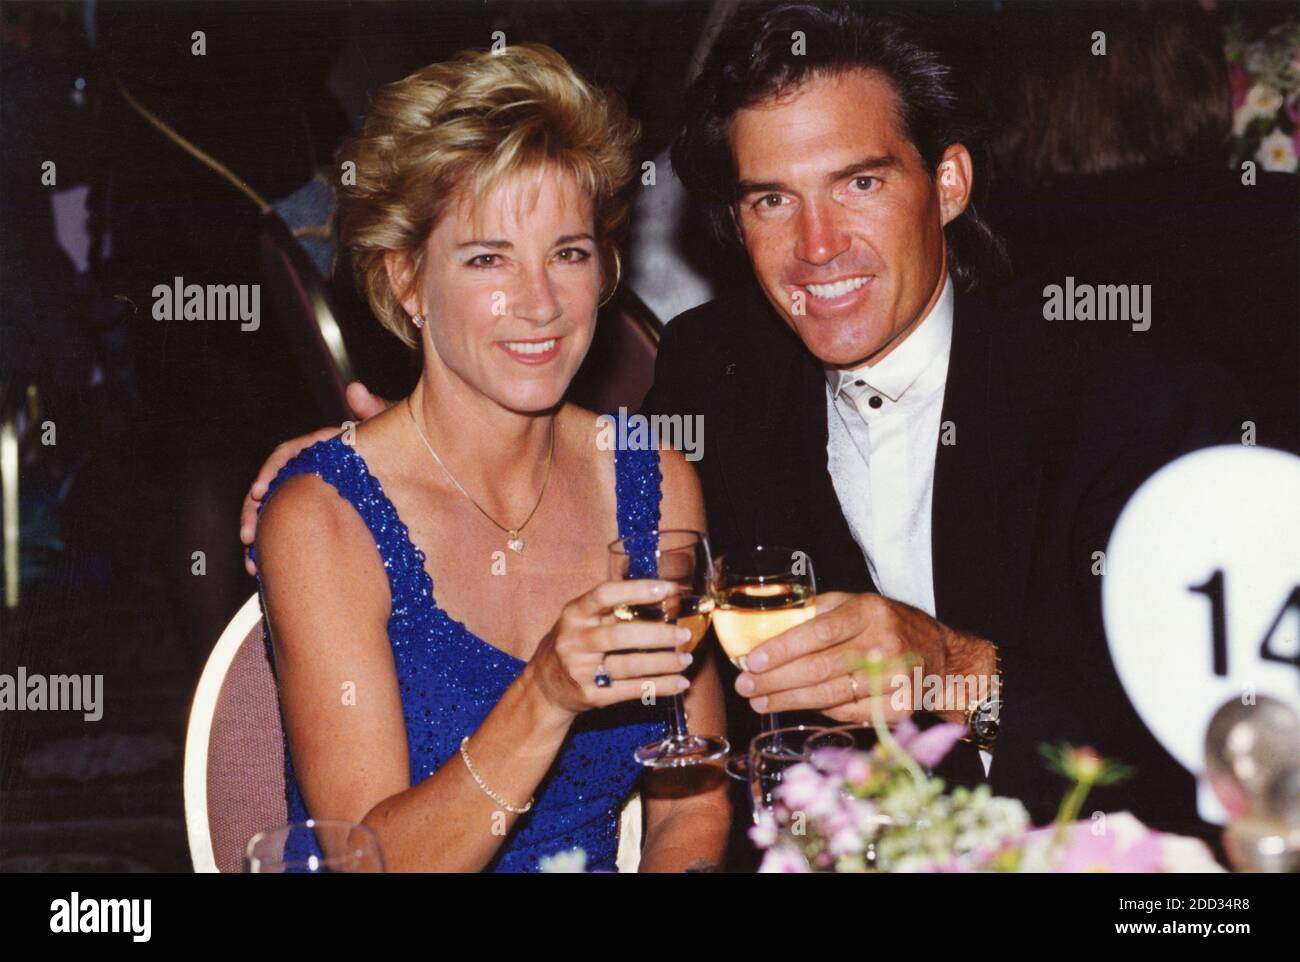 American tennis player Chris Evert, 1990s Stock Photo